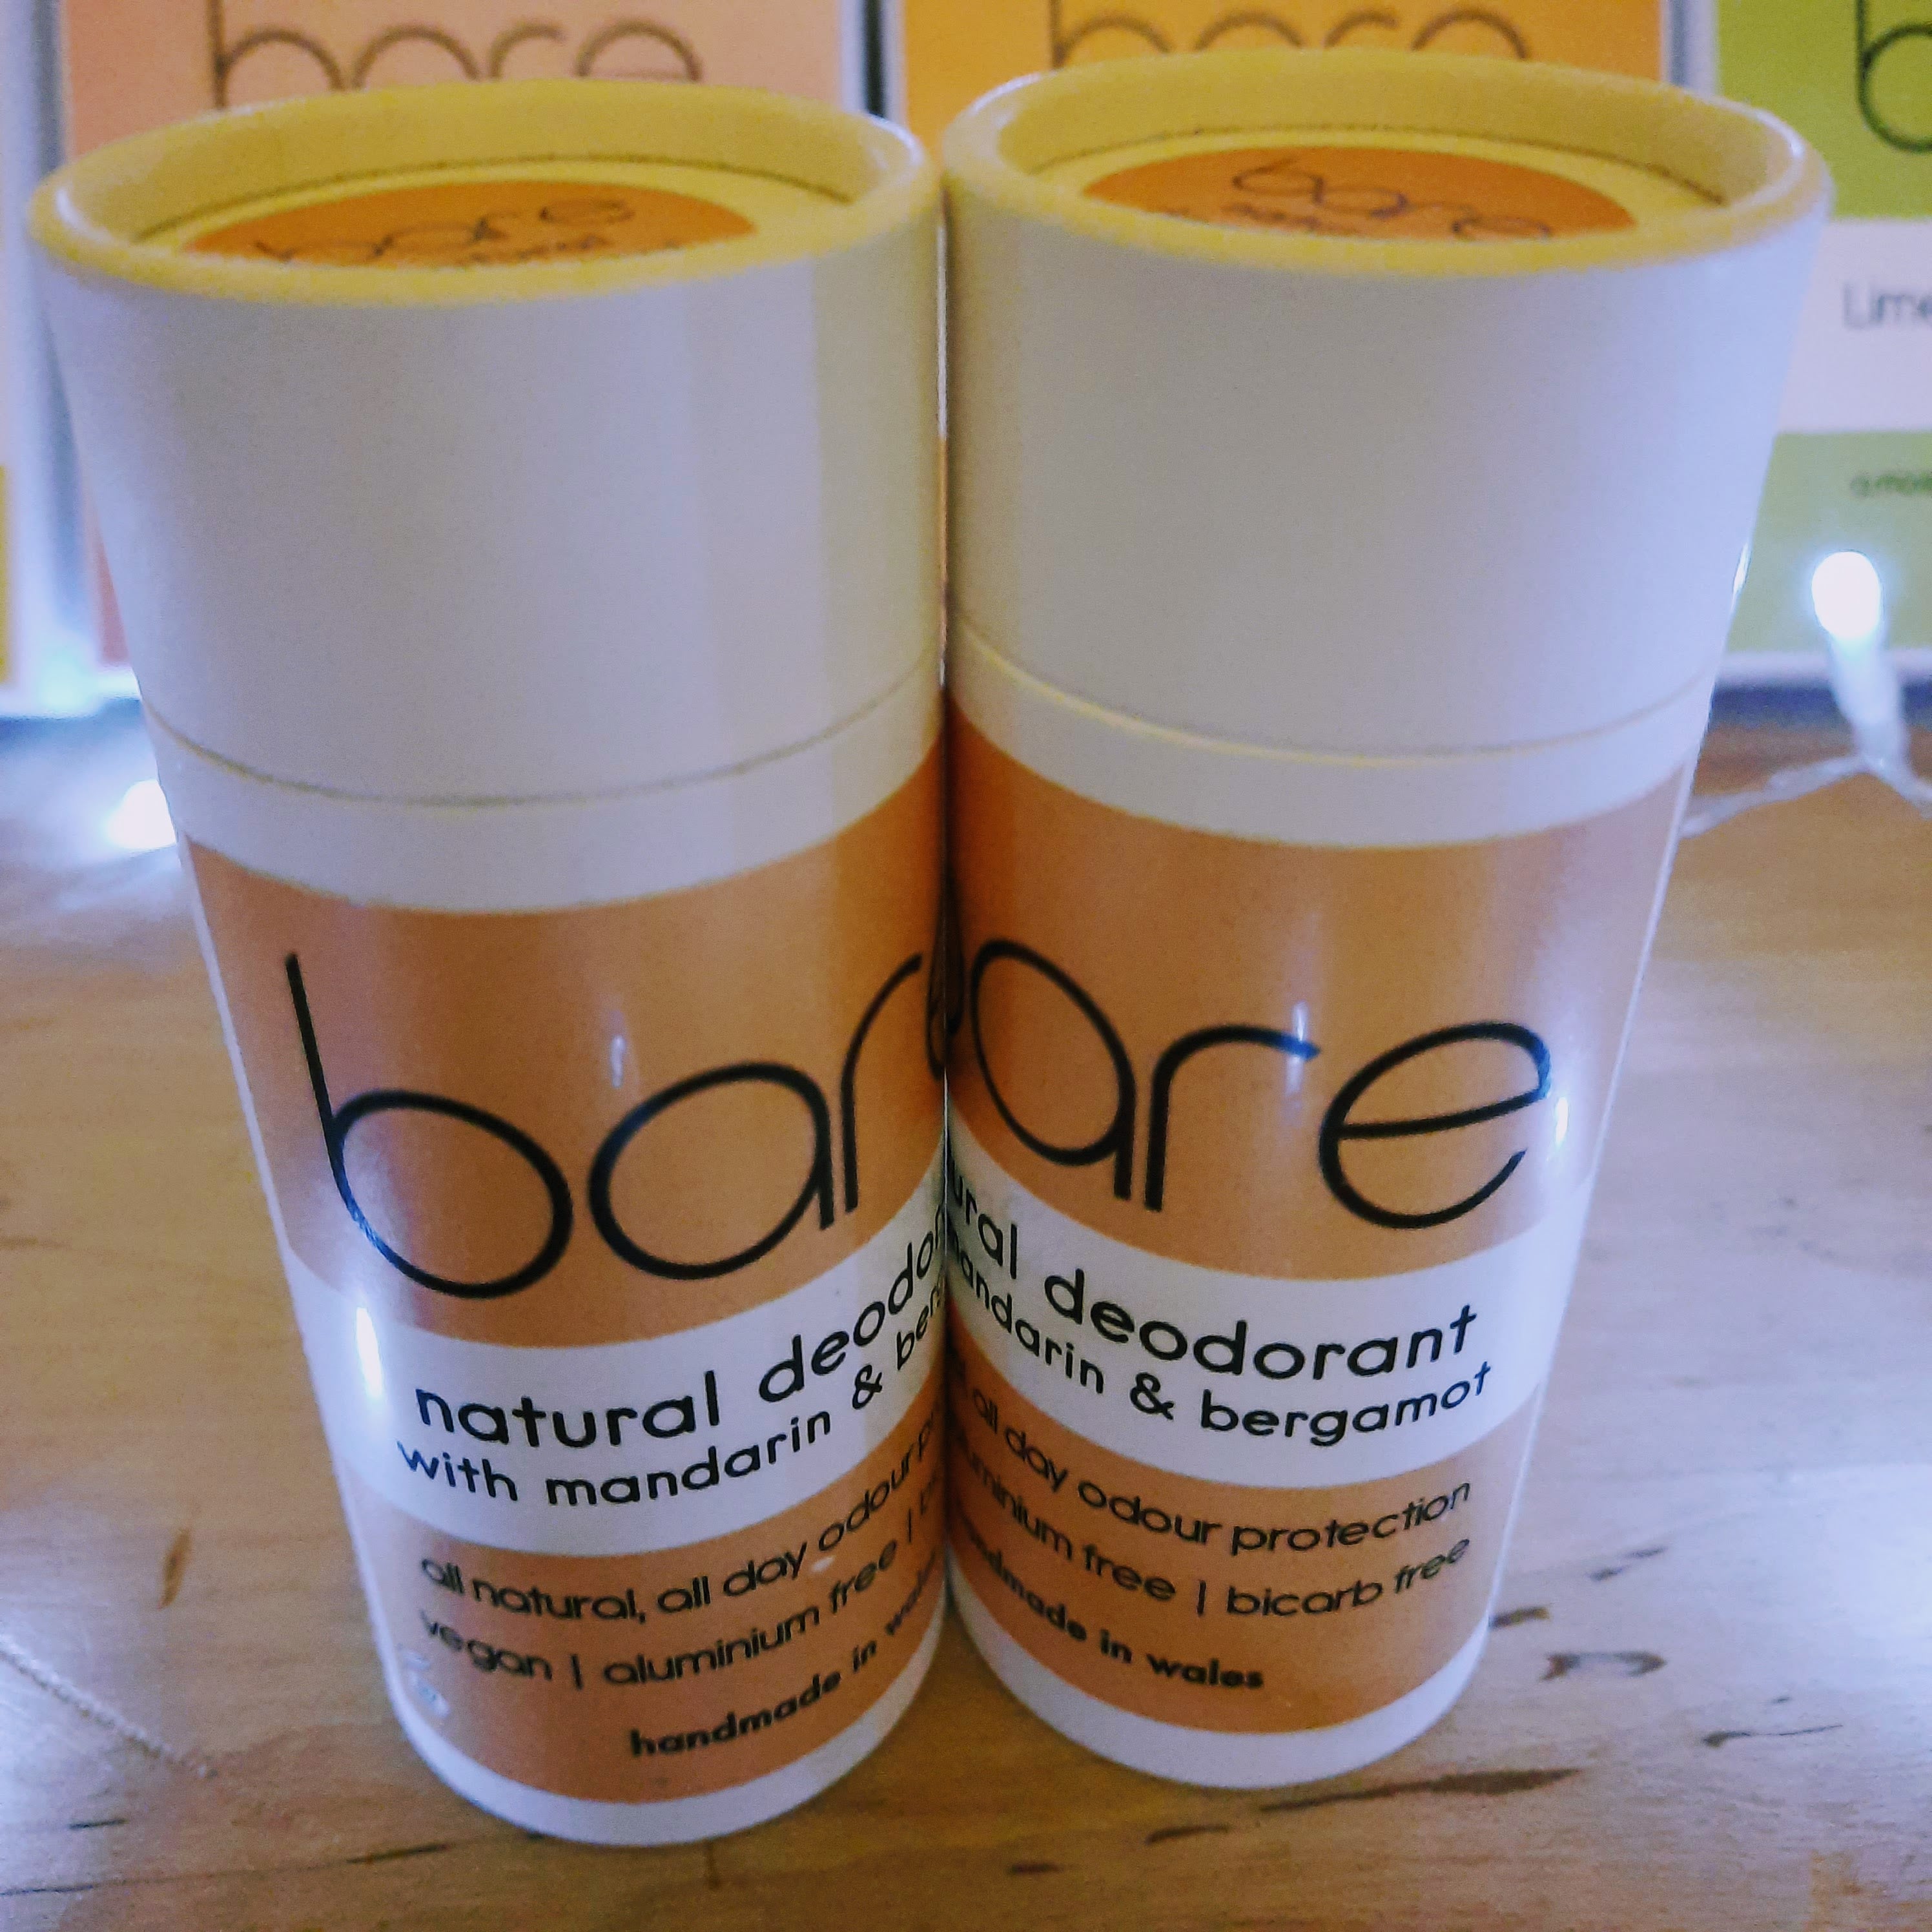 Bare Natural Deodorant with Mandarin and Bergamot